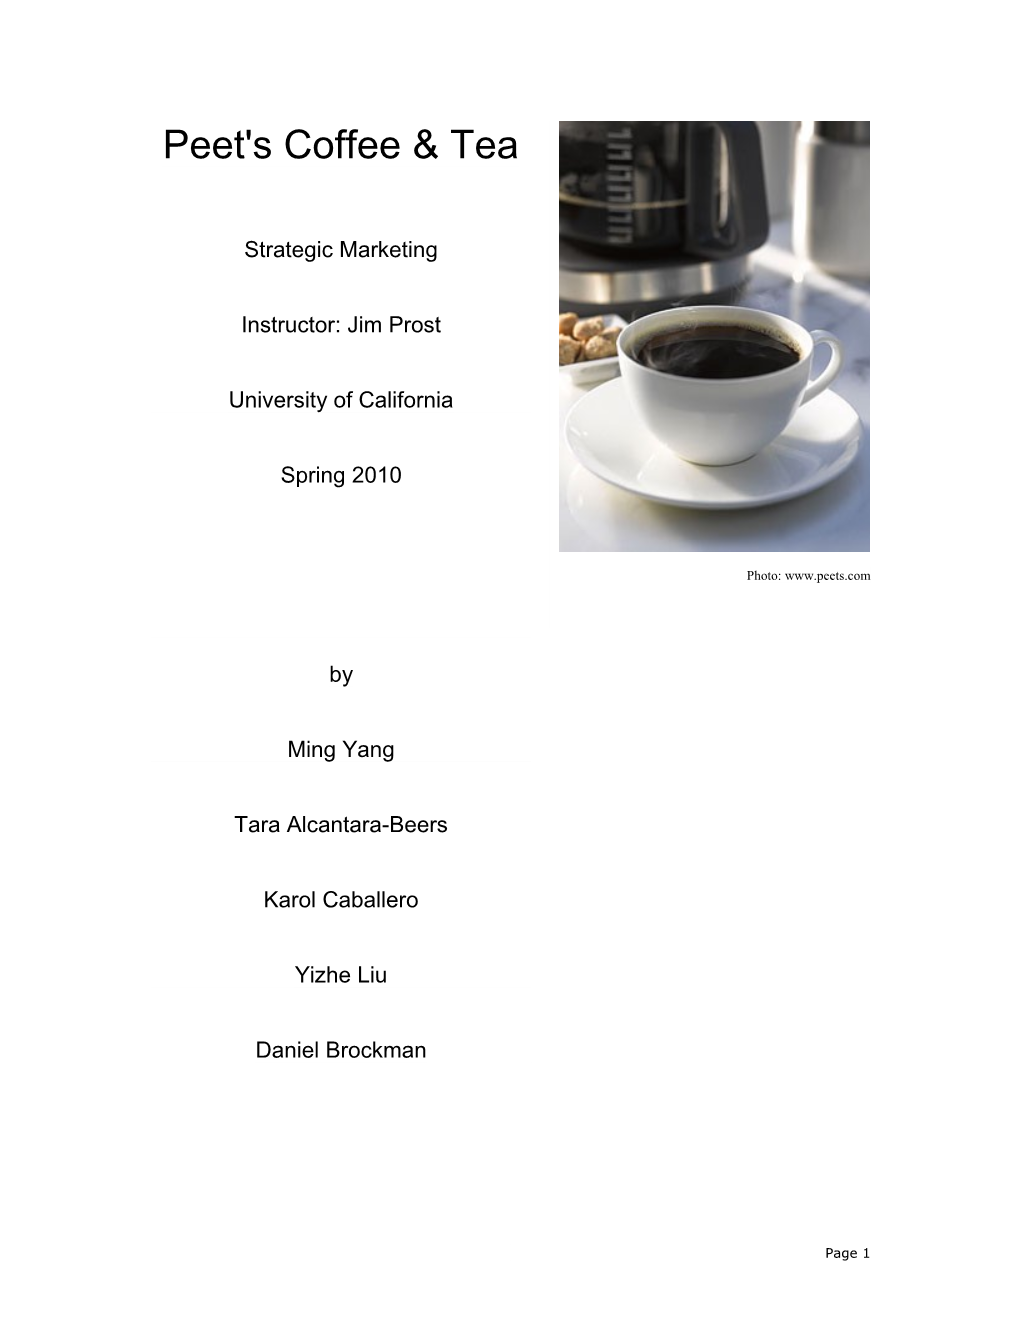 General Description of Peet's Coffee & Tea